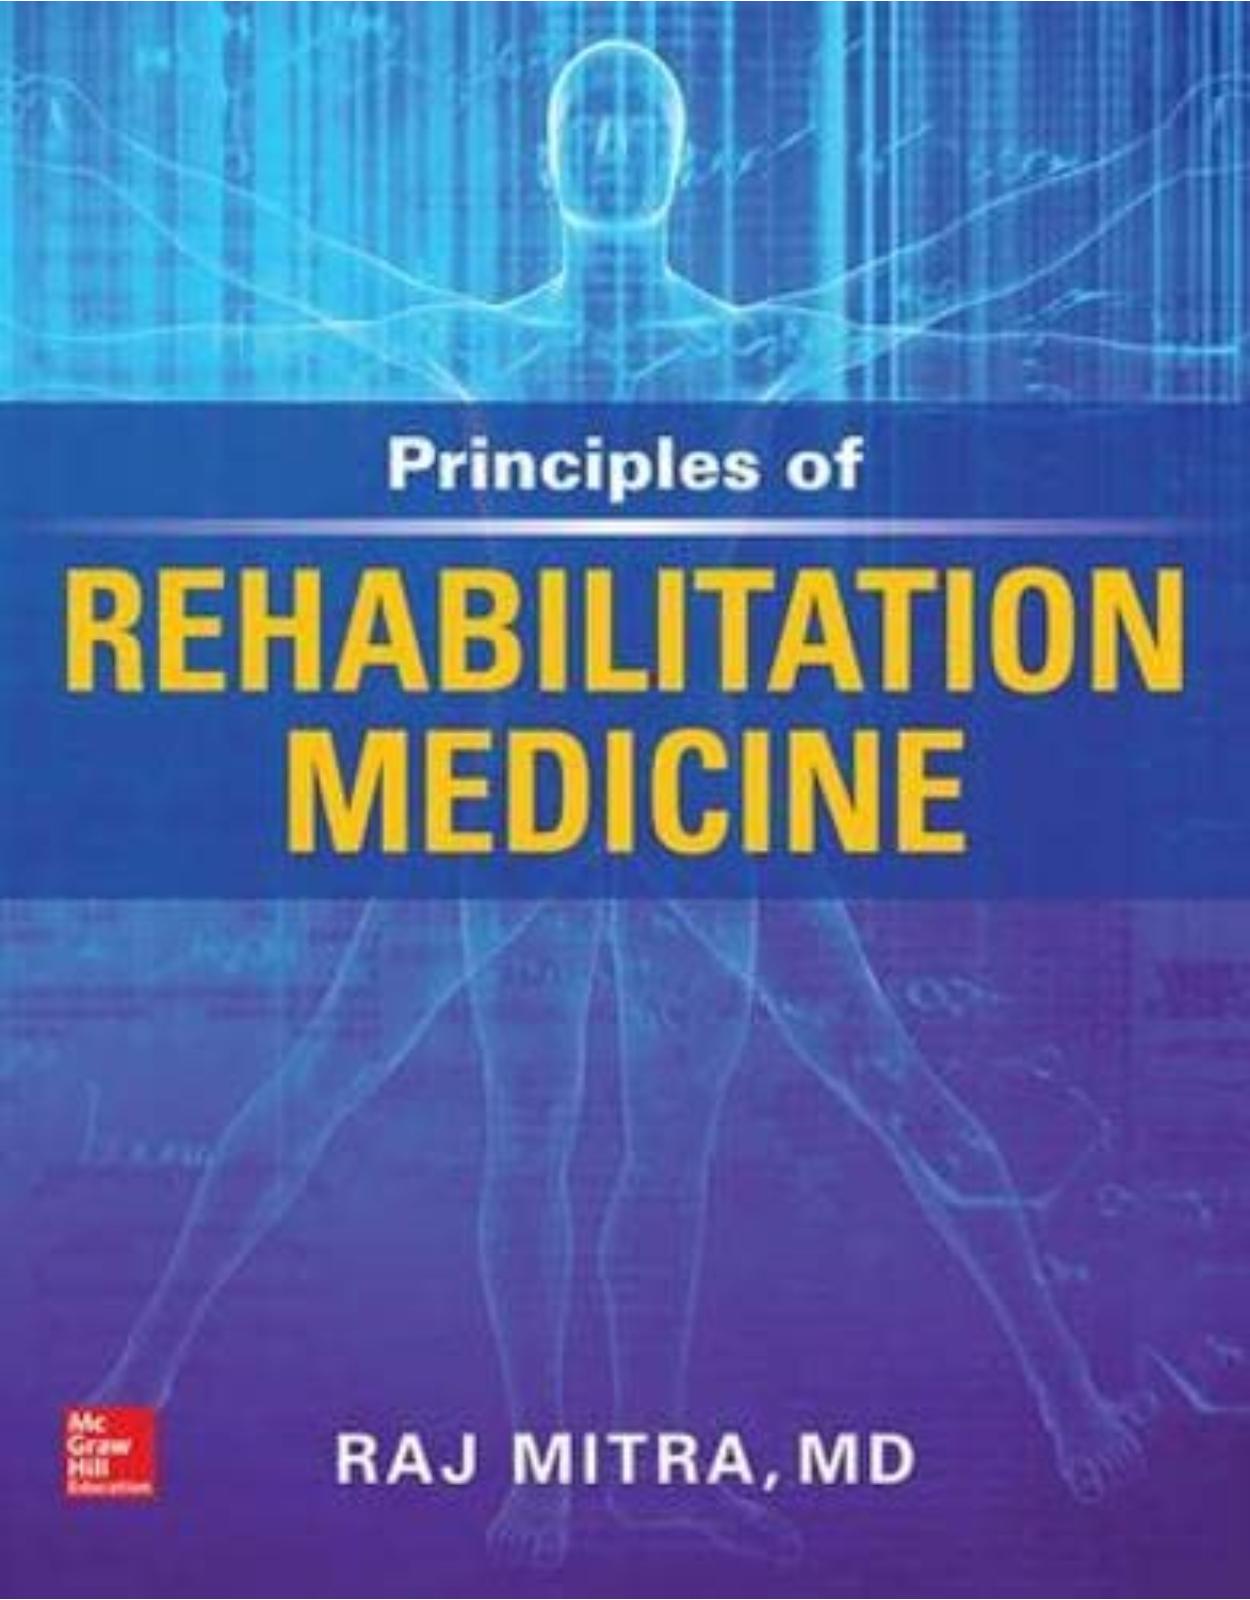 Principles of Rehabilitation Medicine